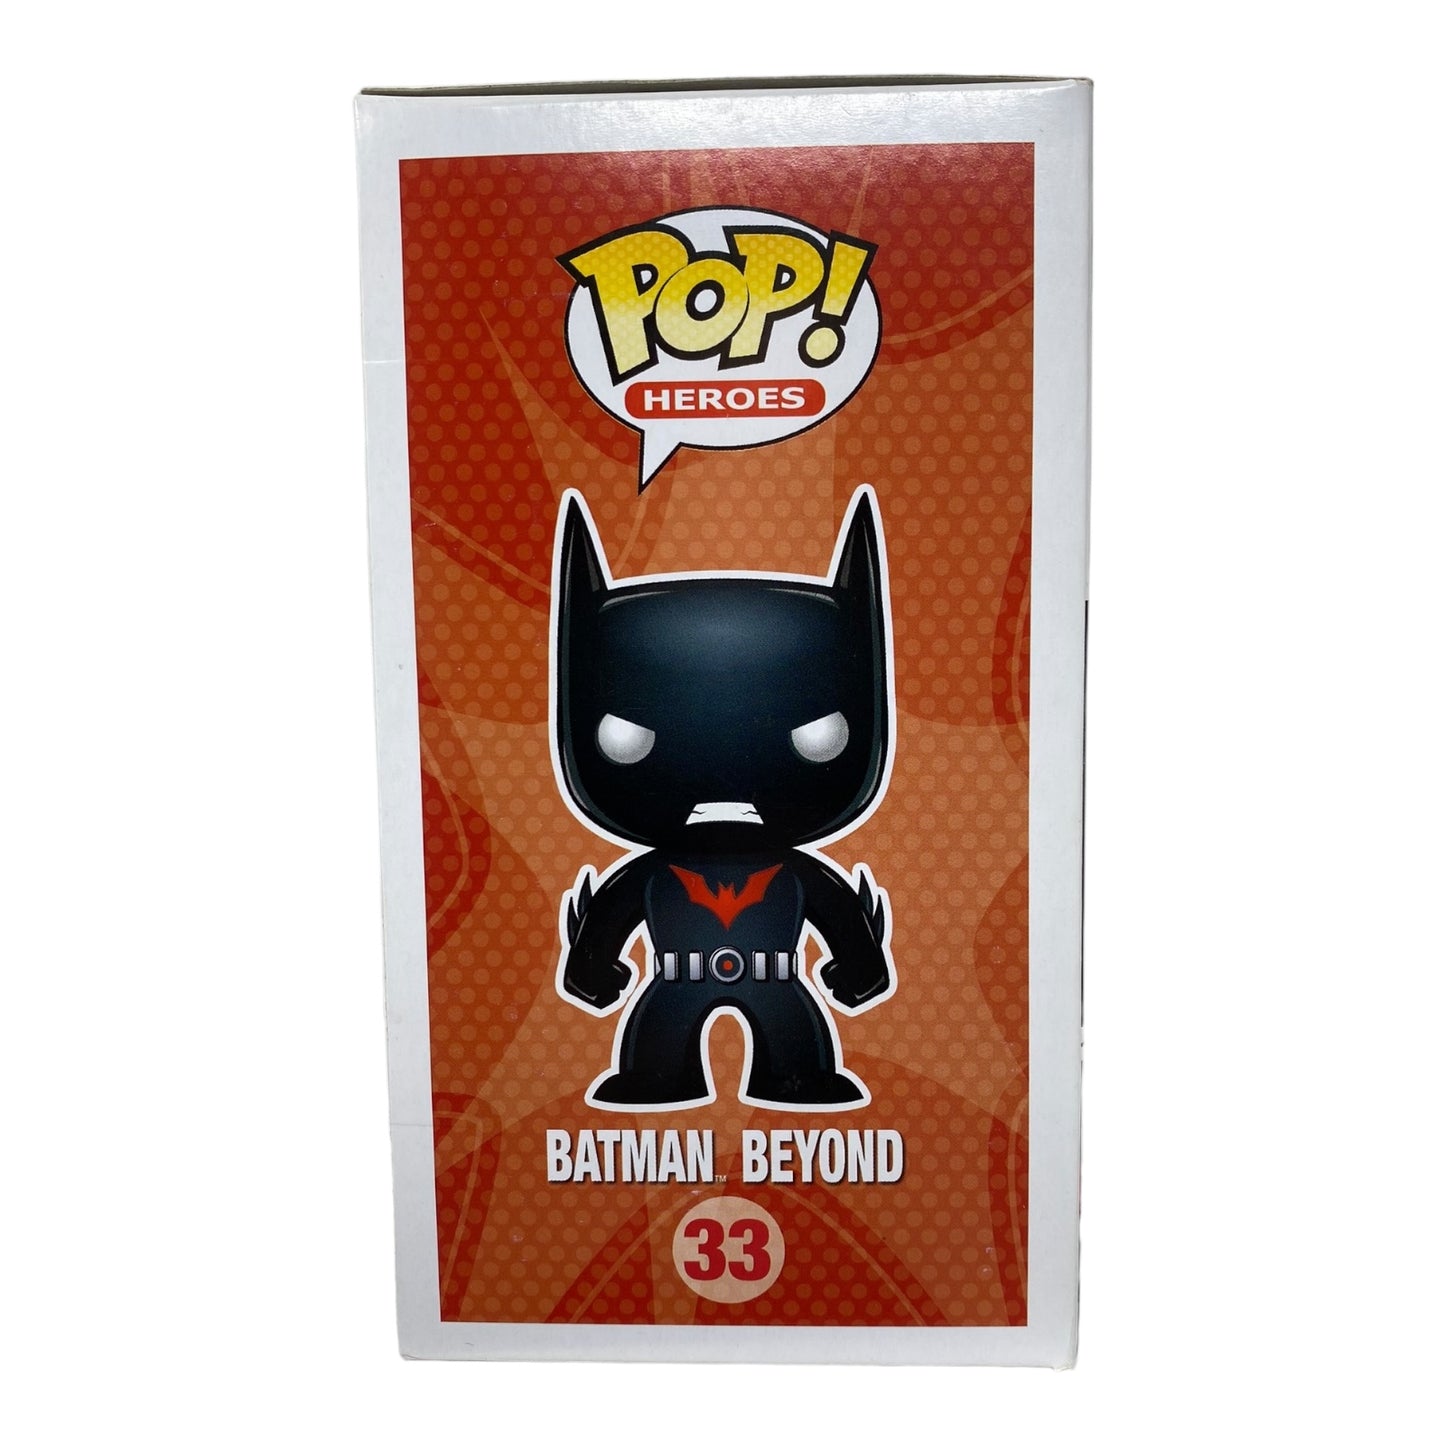 Sold - 2013 - Batman Beyond 33, Fugitive Toys Exclusive (light sun-fade damage)